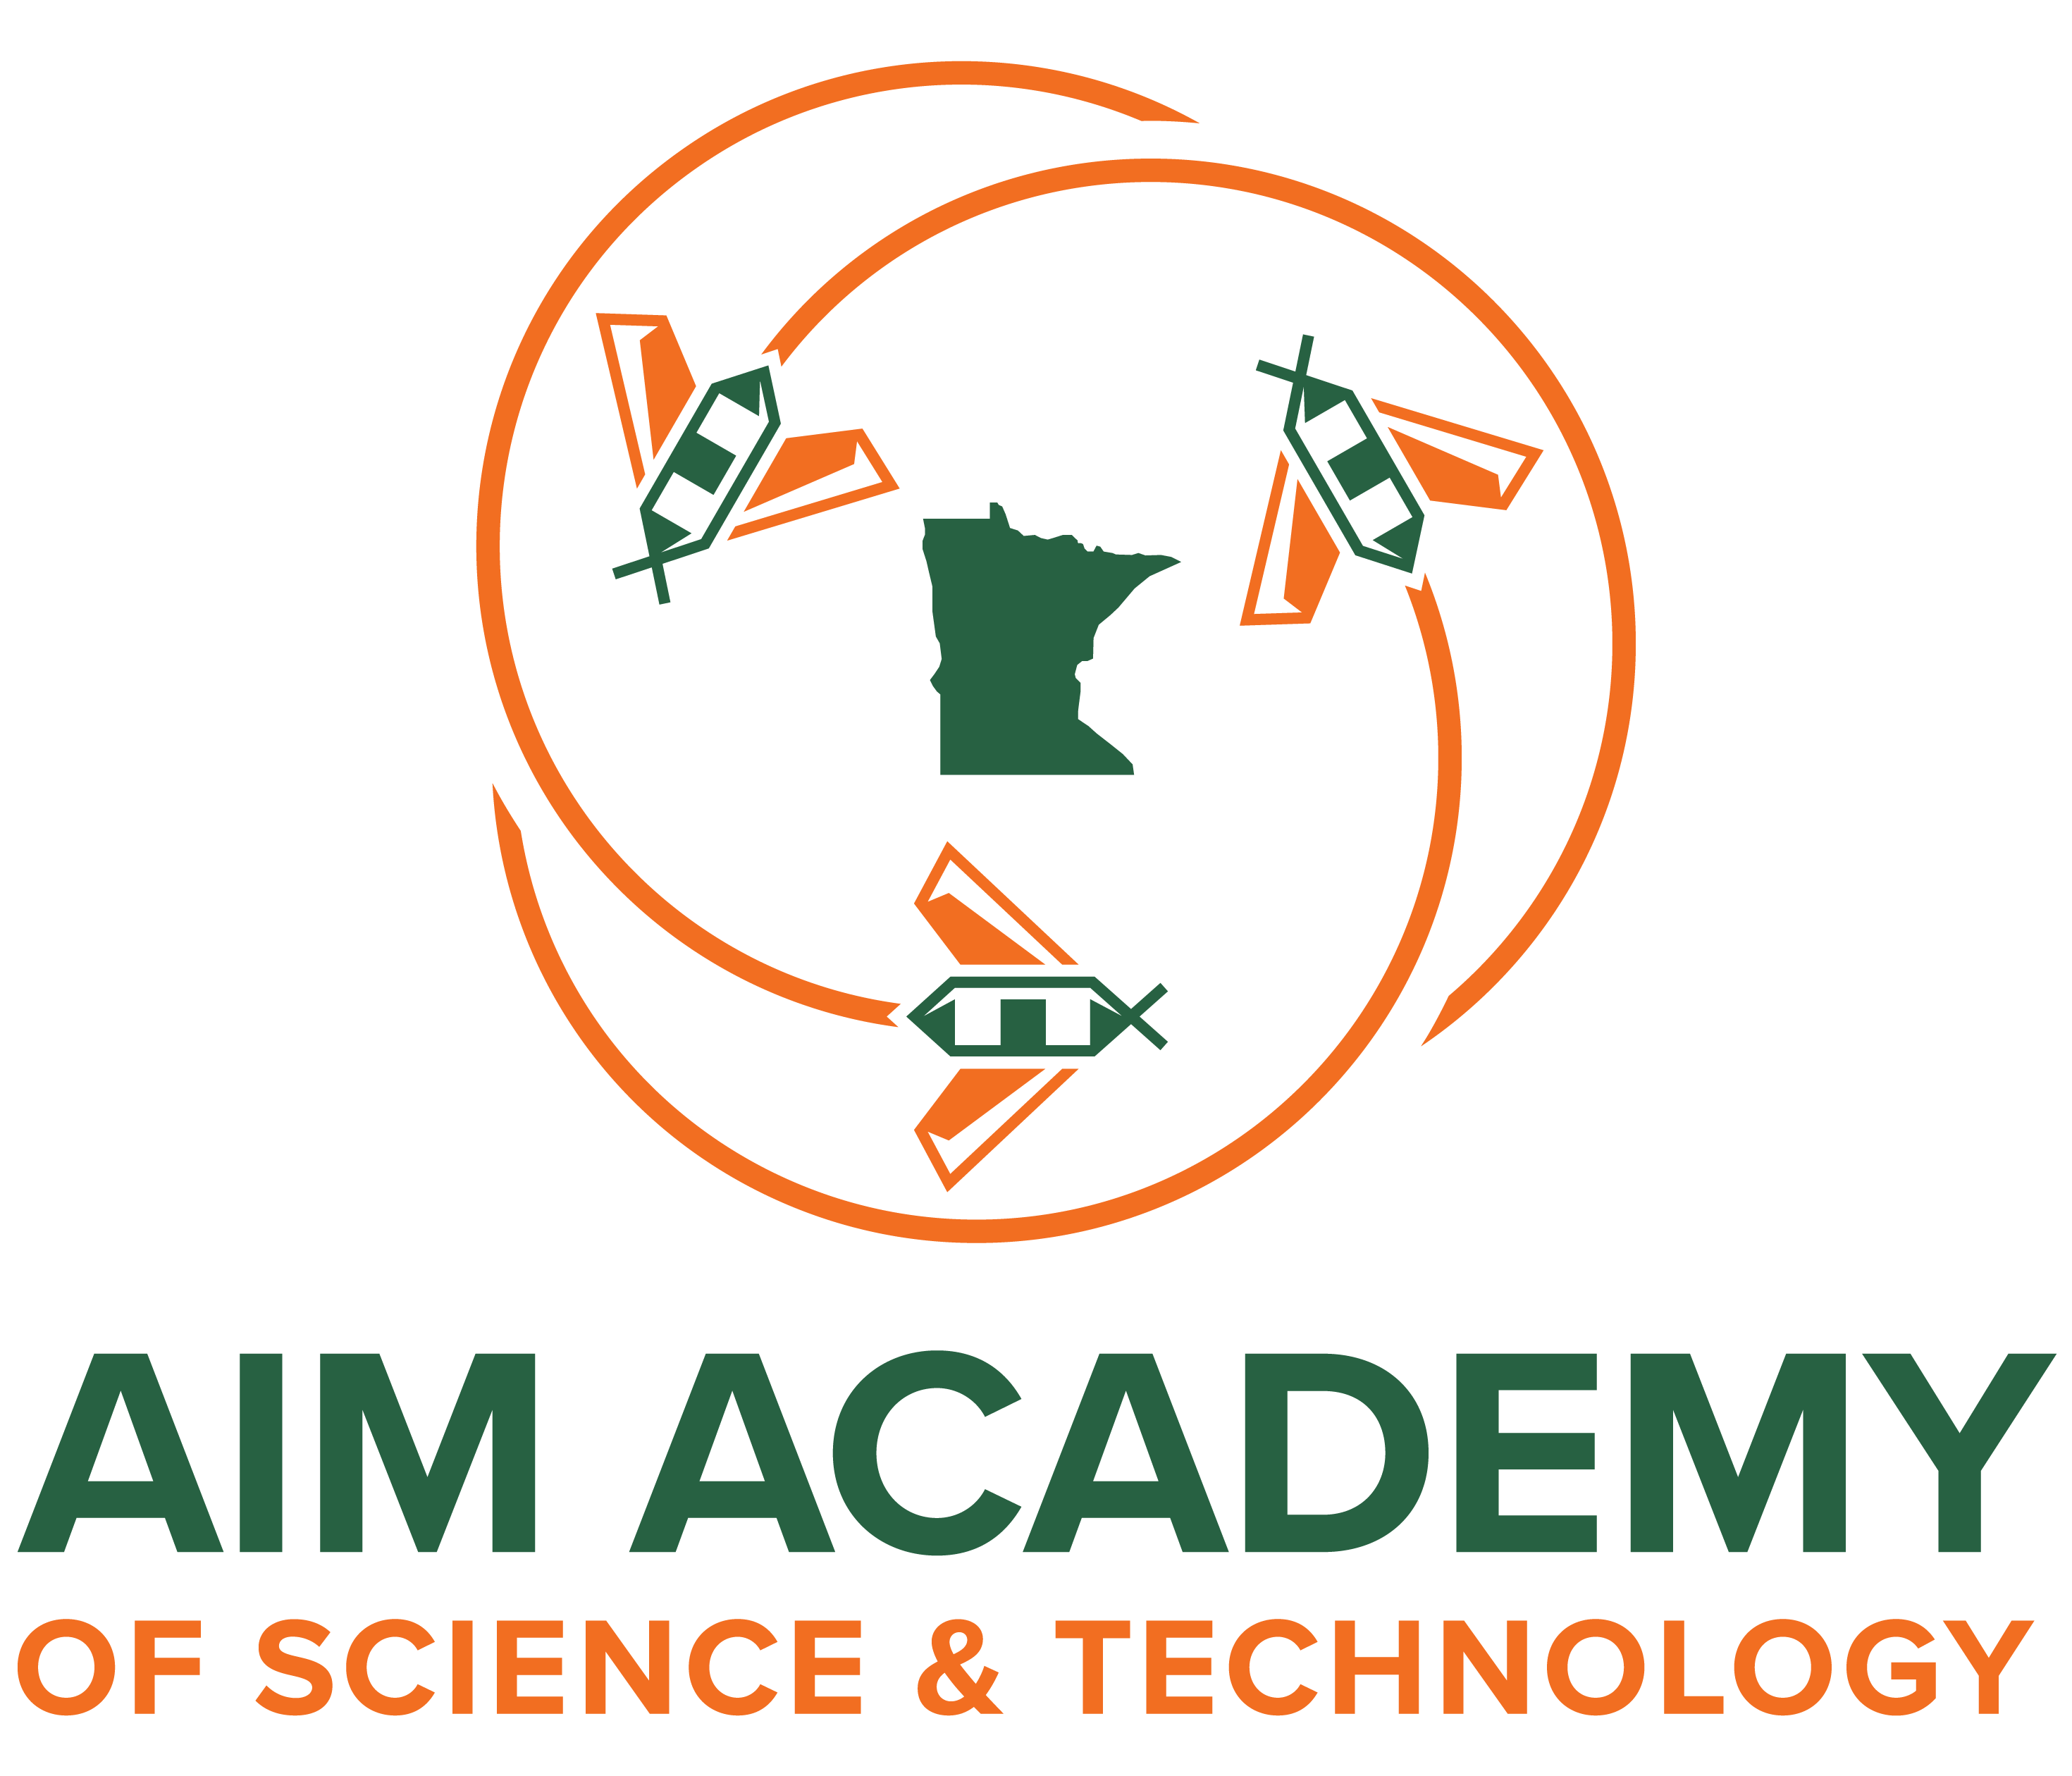 Aim Academy of Science & Technology logo.